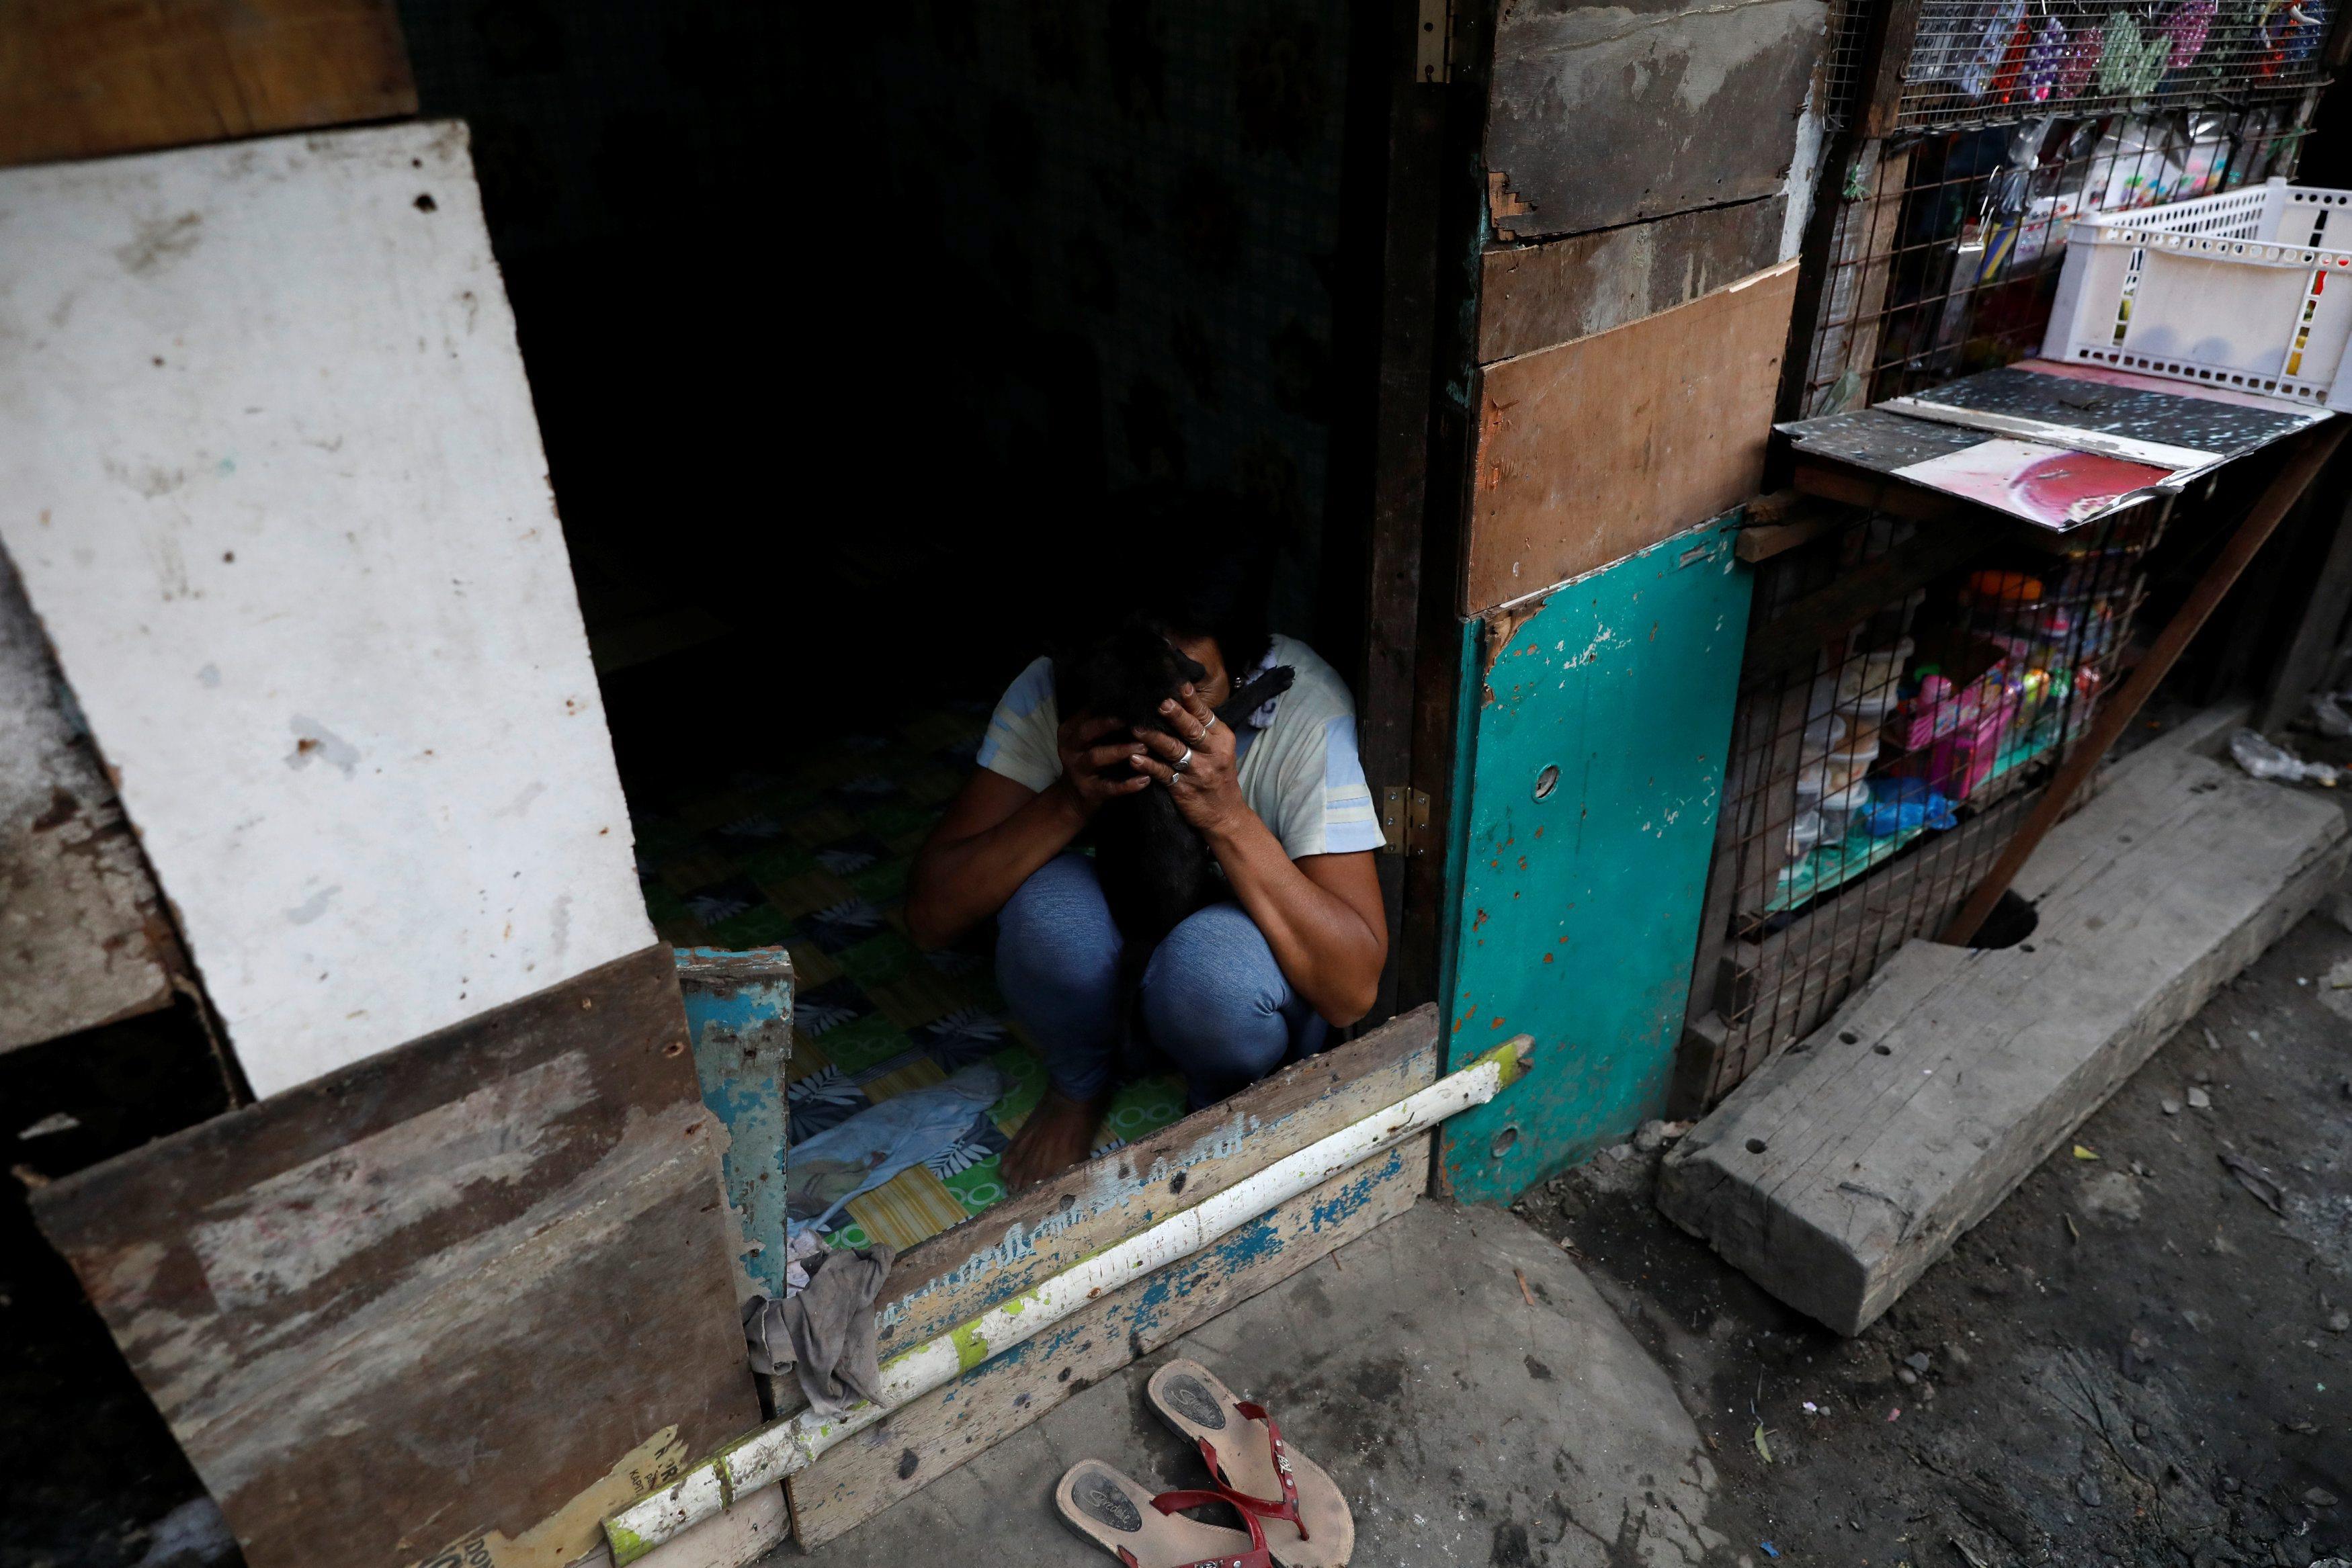 The Wider Image: Night in Manila slum revives spectre of drug war deaths